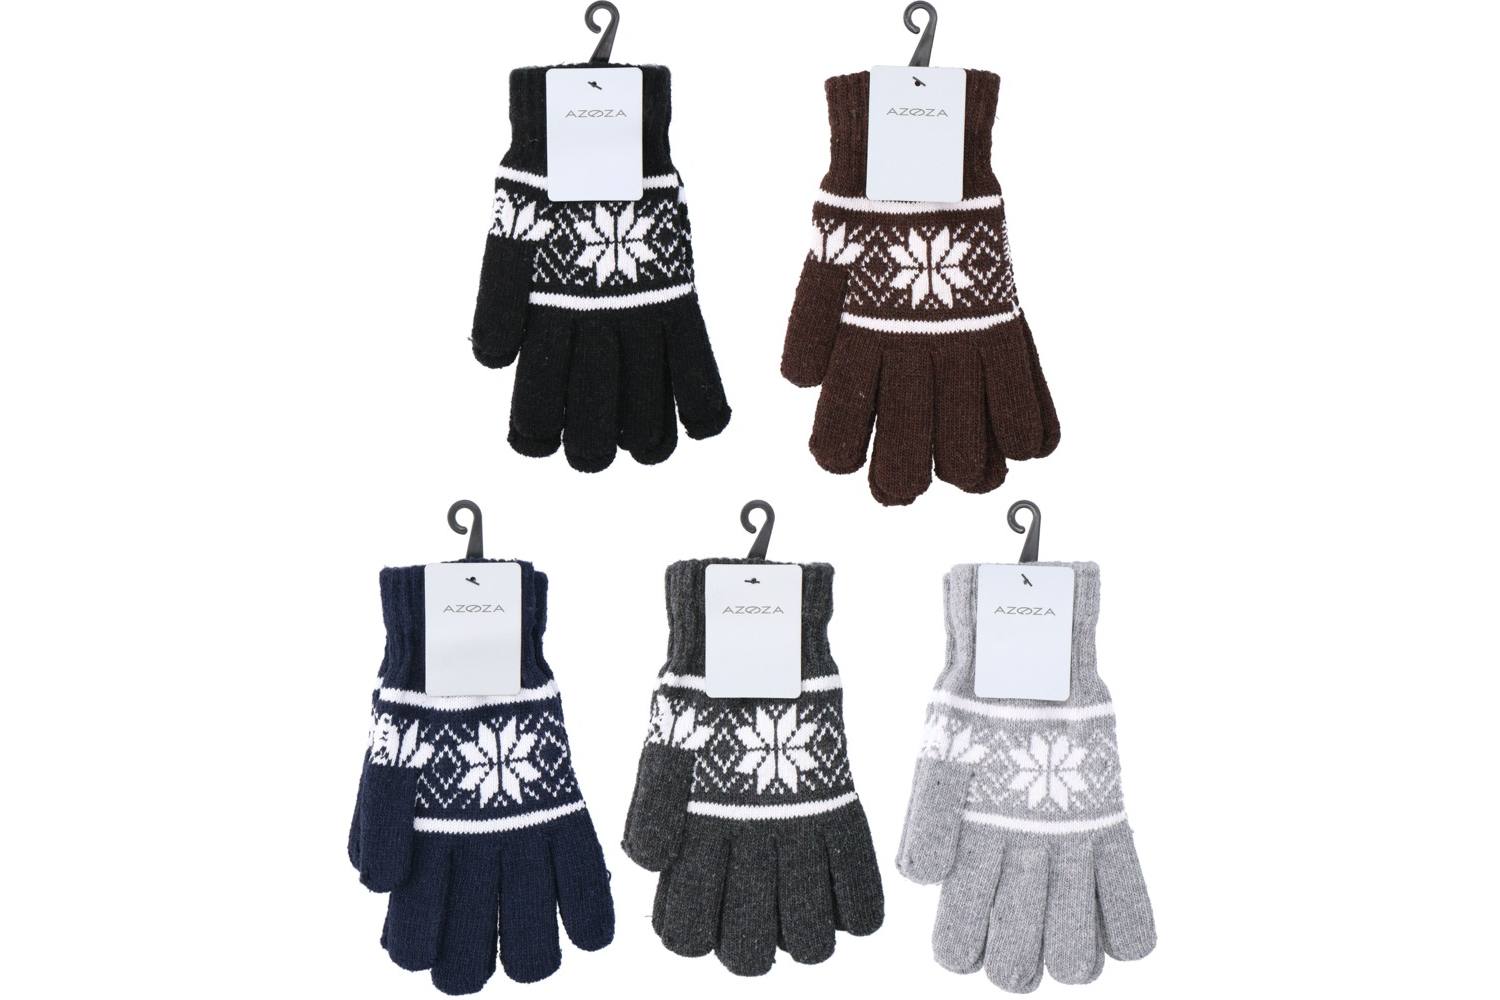 Handschoenen, Azøza, 5 assorti, sneeuwvlok 2